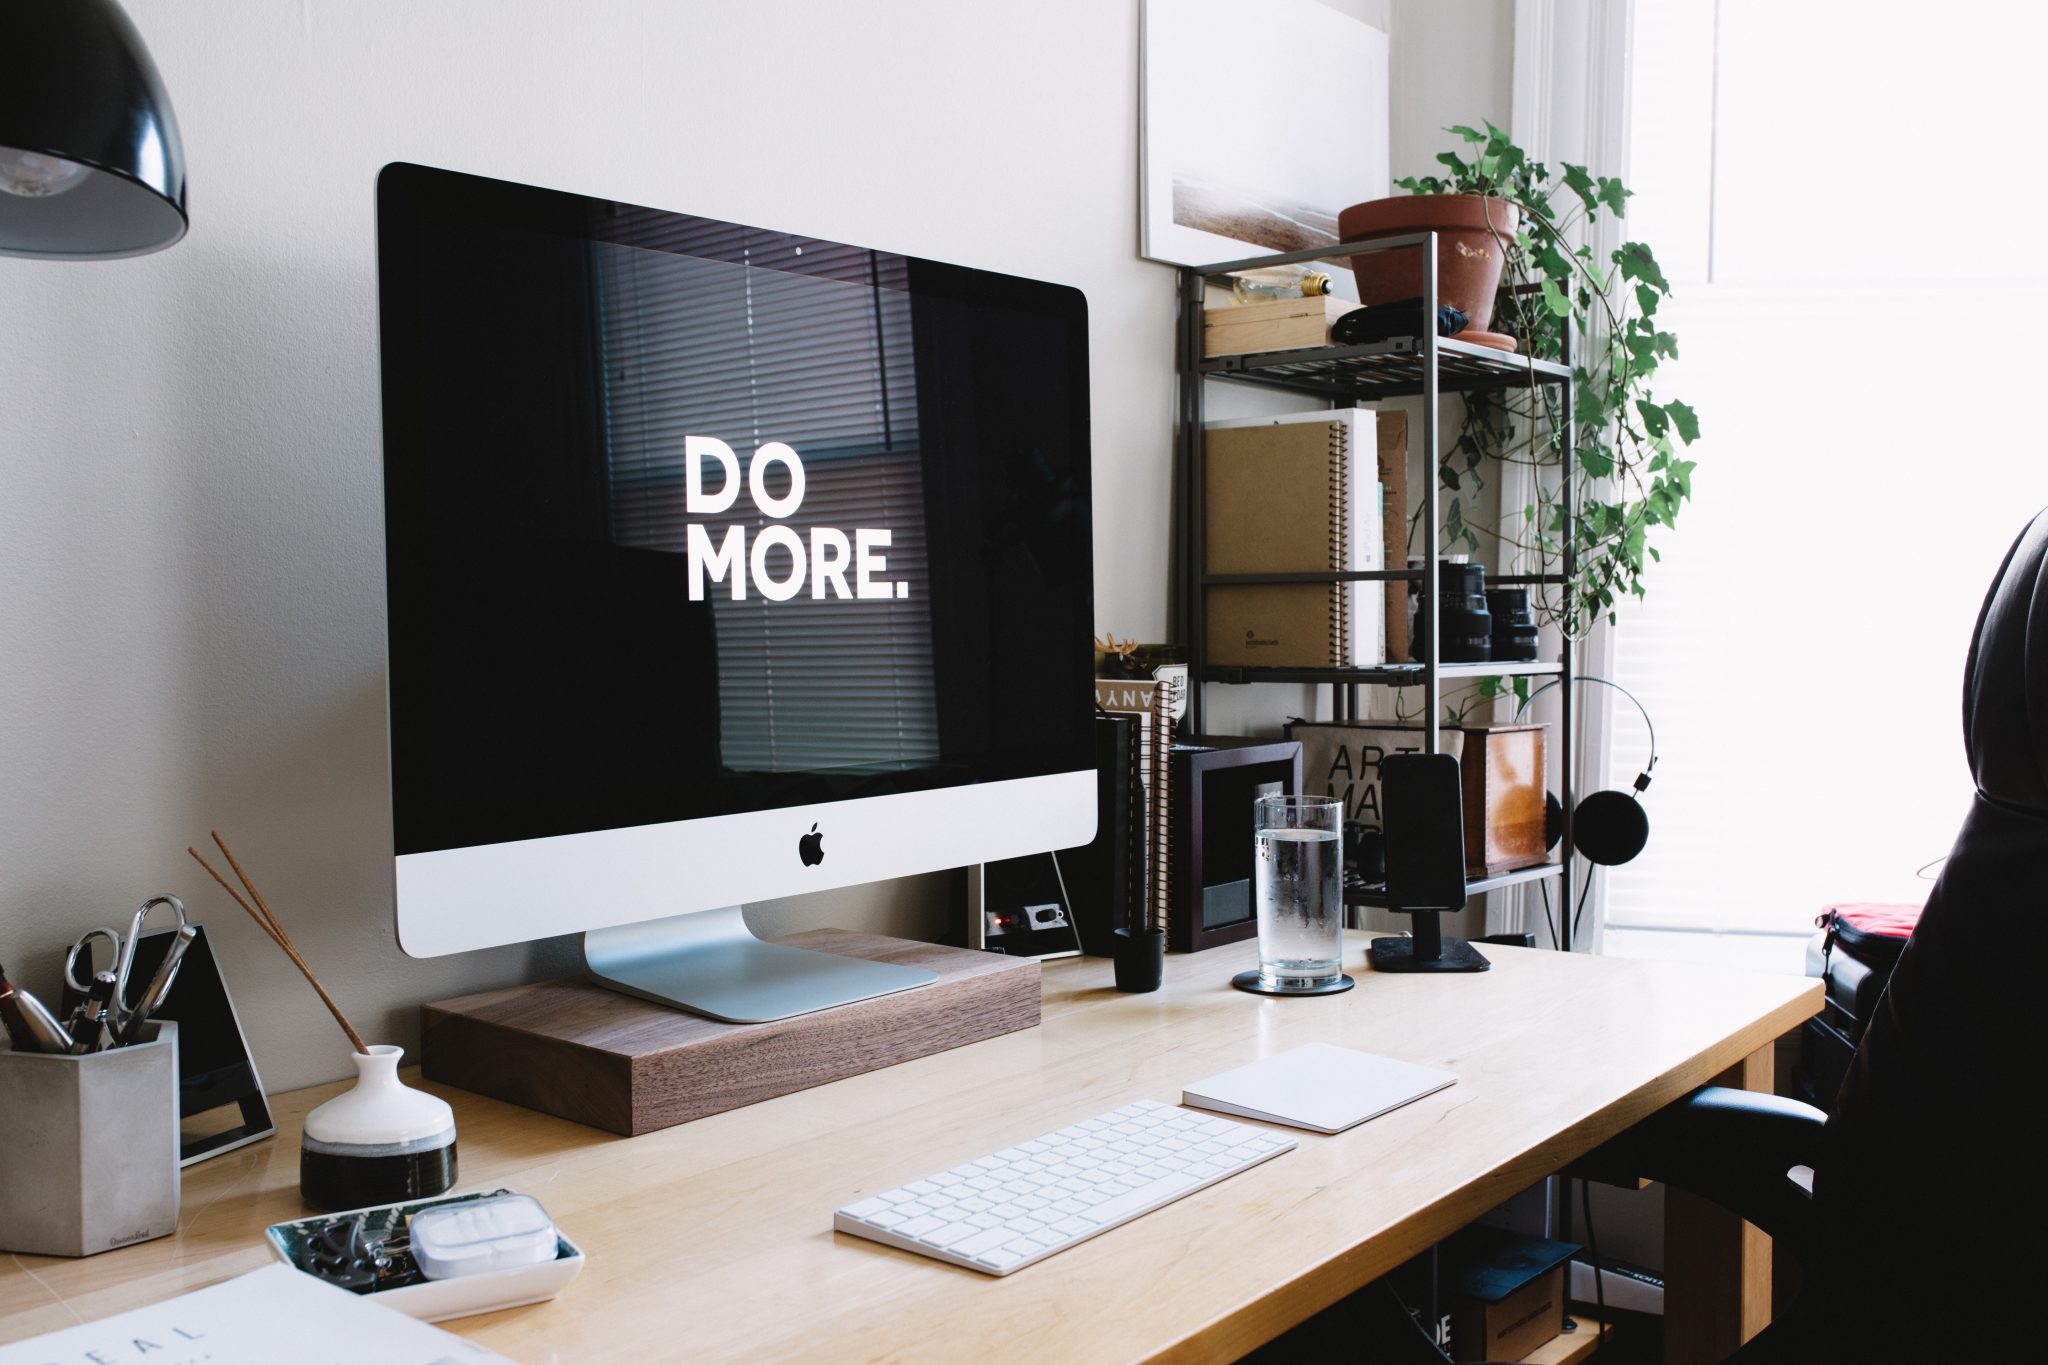 an iMac a wallpaper saying "Do More"